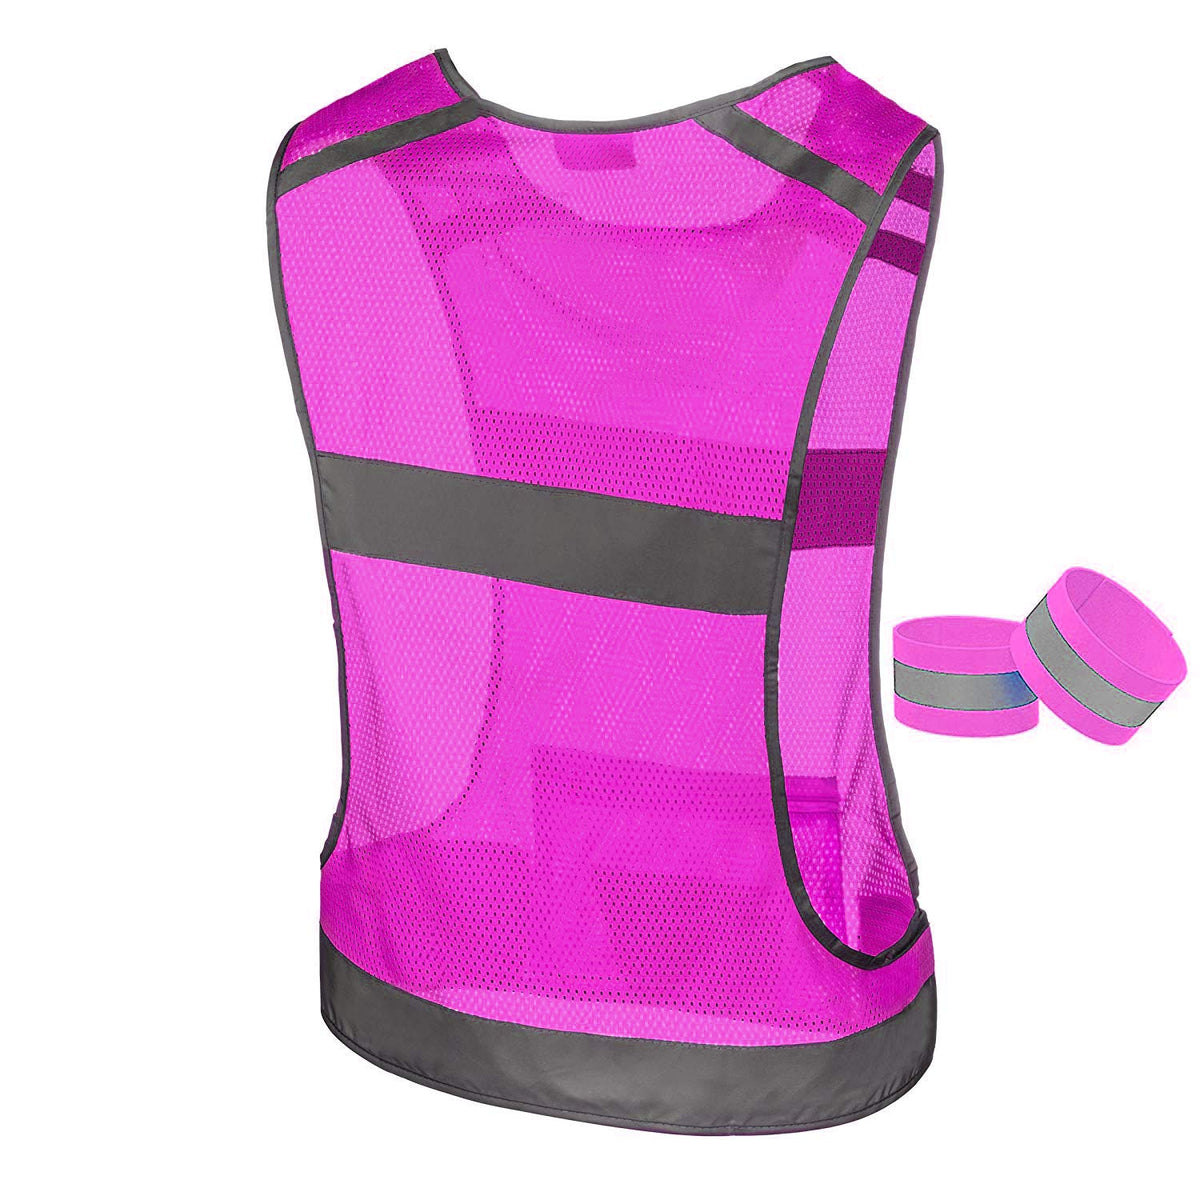 Reflective Running Vest Gear: Sports and Outdoors – www.247viz.com